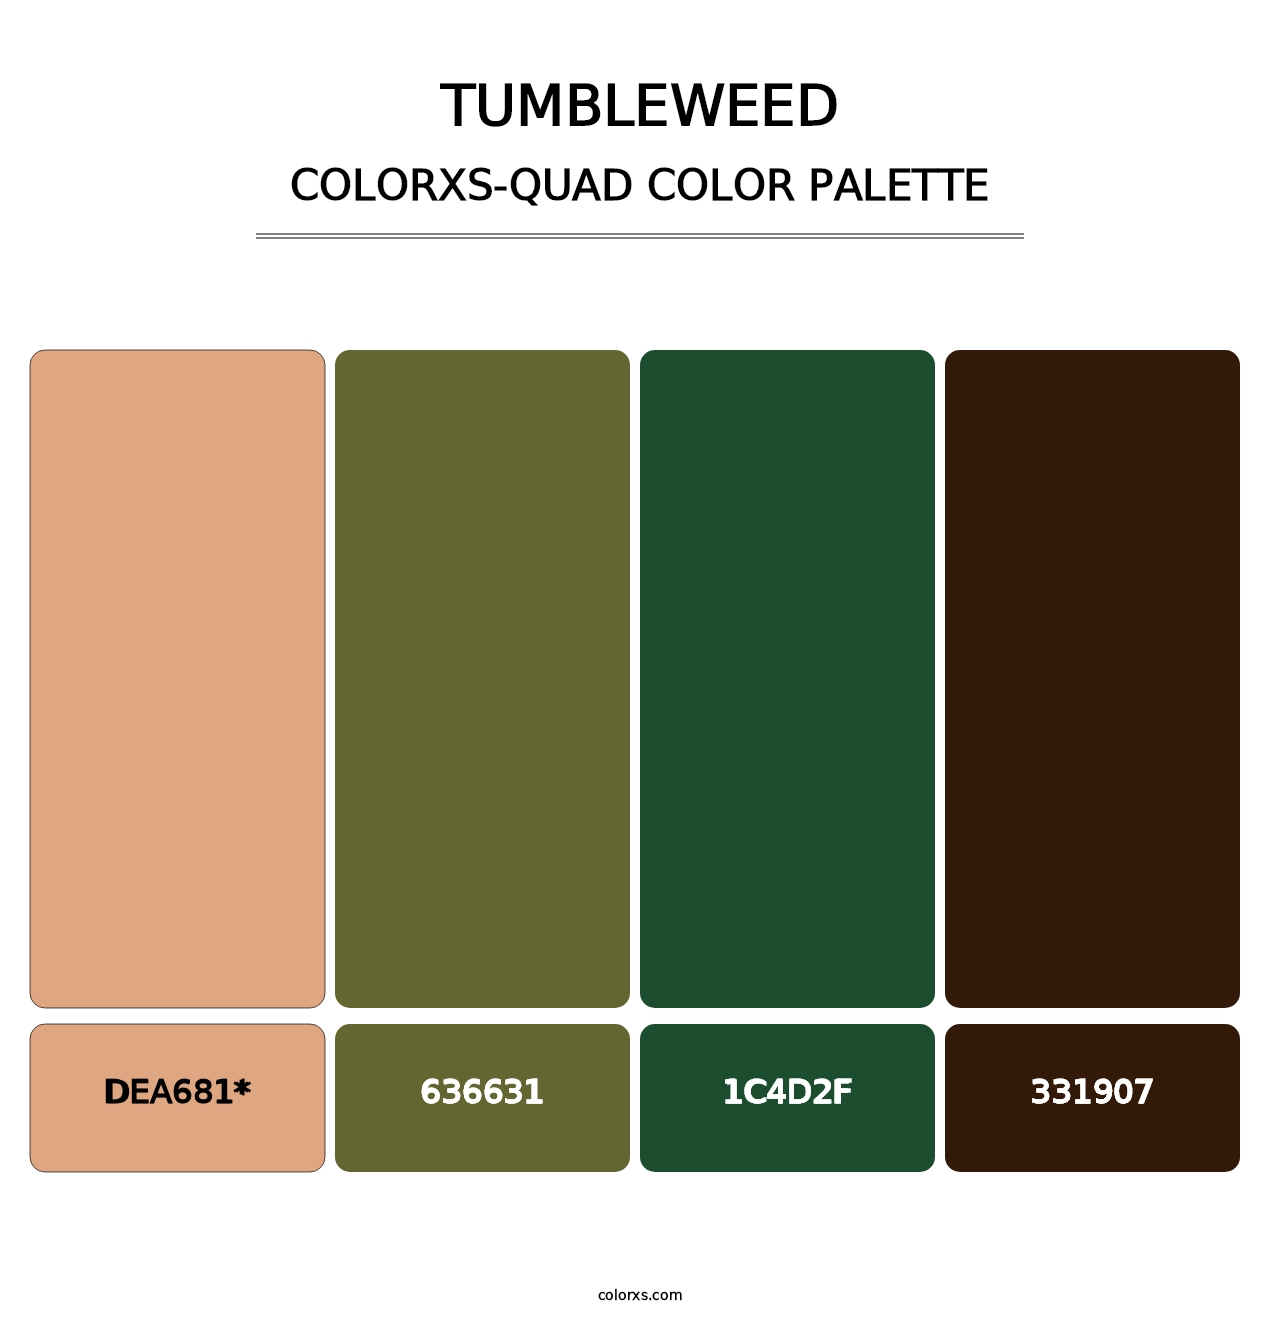 Tumbleweed - Colorxs Quad Palette